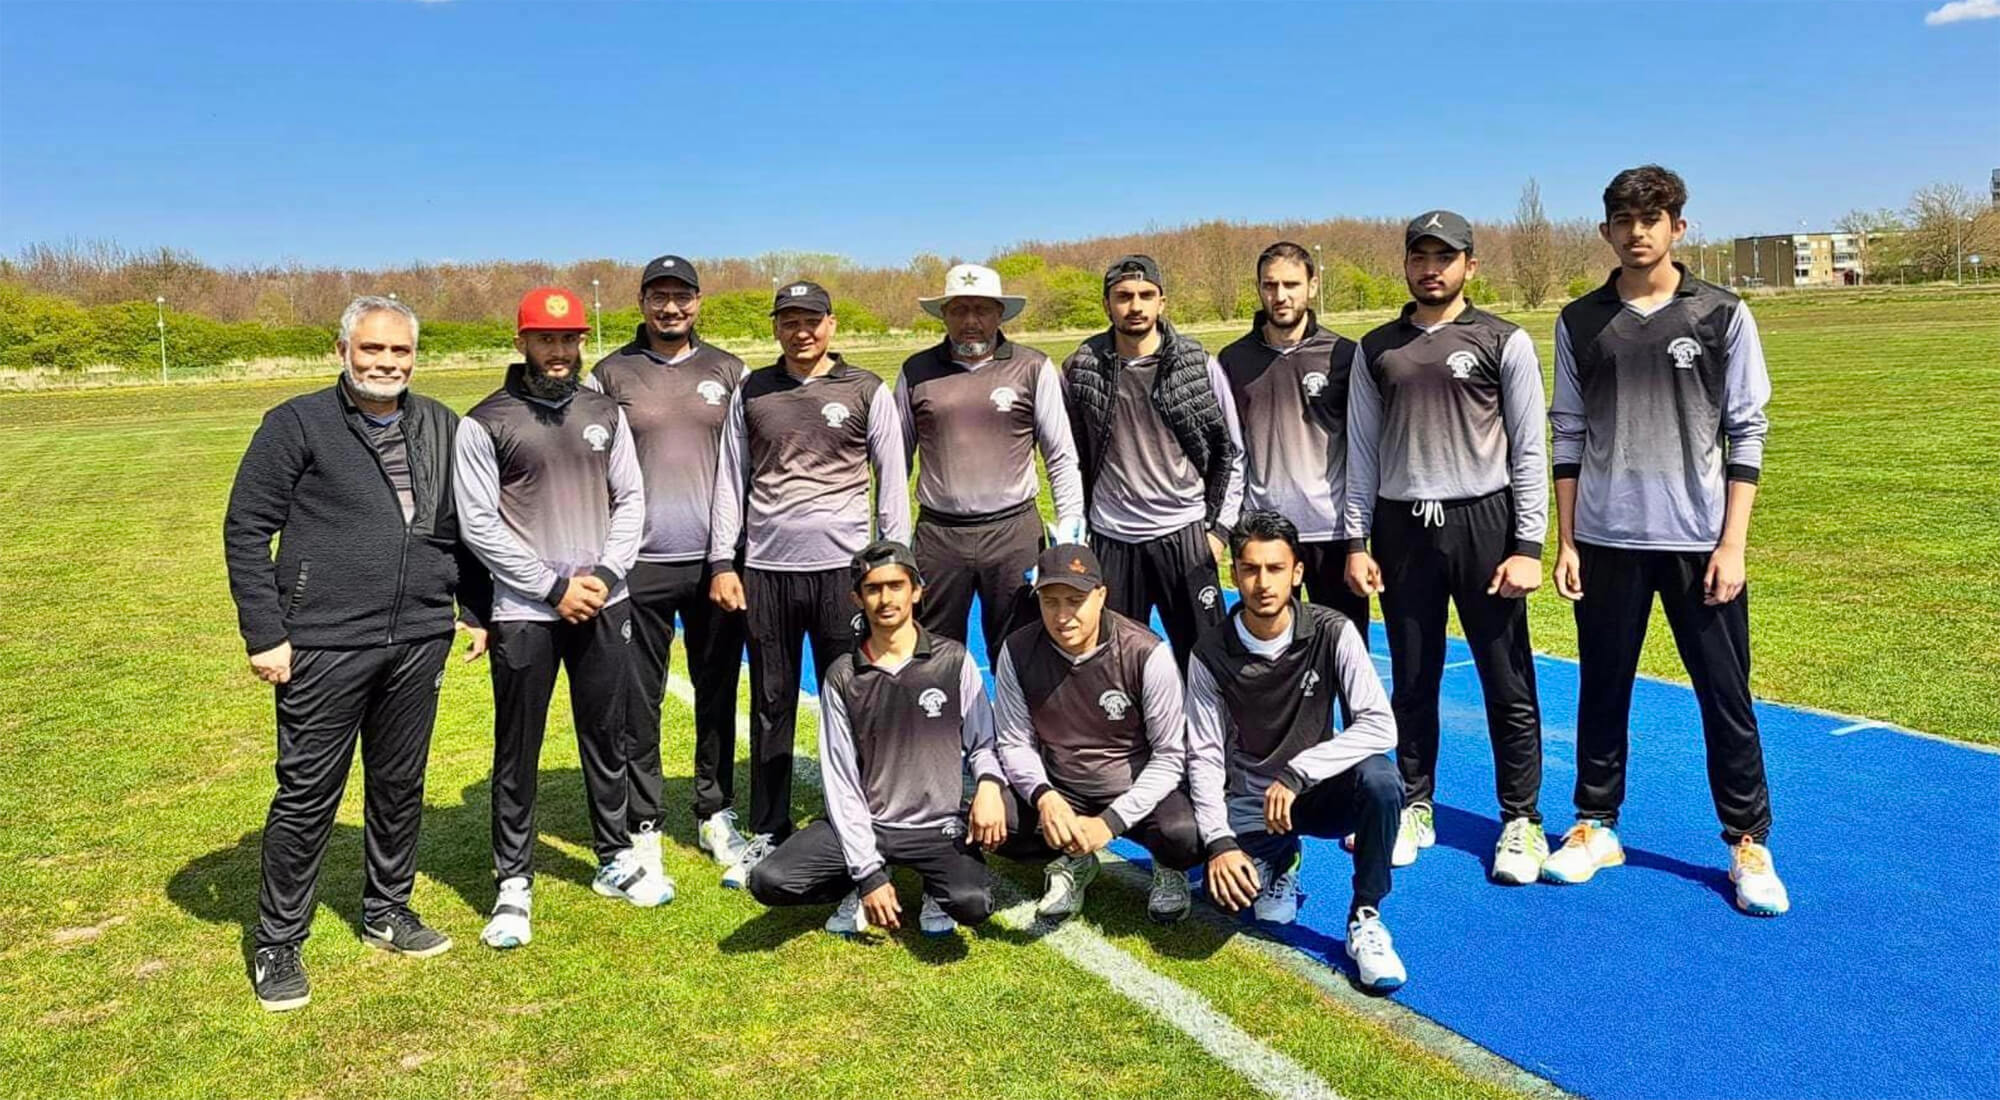 landskrona-cricket-club-team_tp.jpg